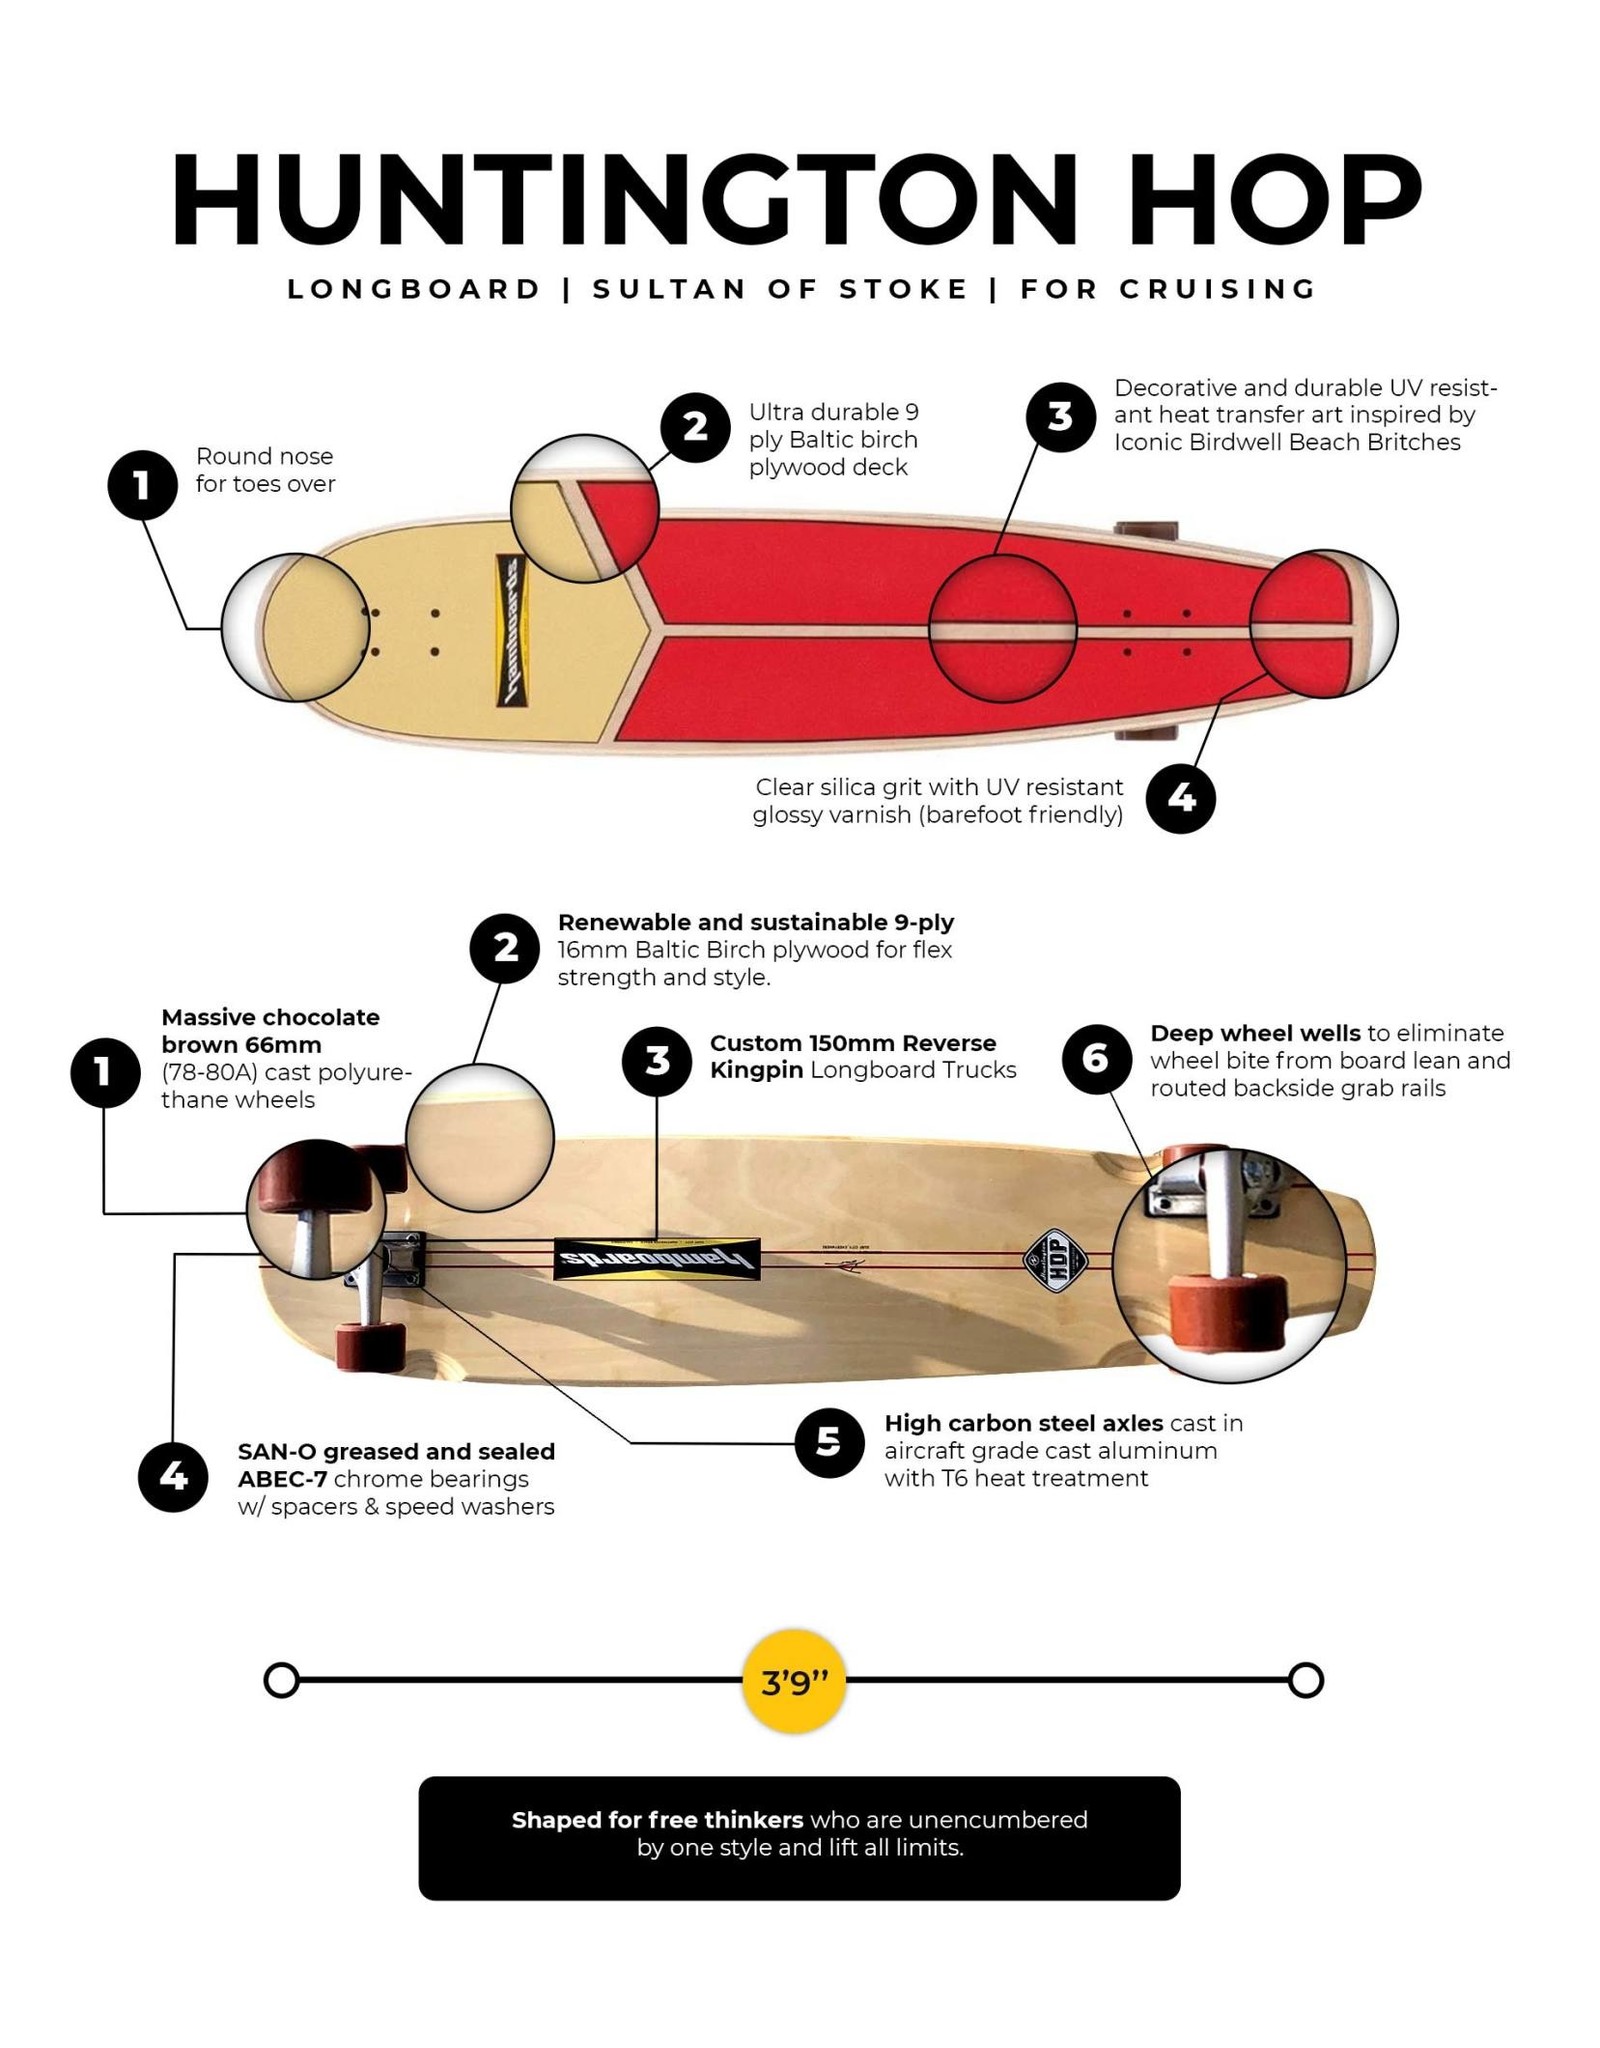 Hamboards Hamboards 45" HHOP Cruising Longboards - Lifeguard